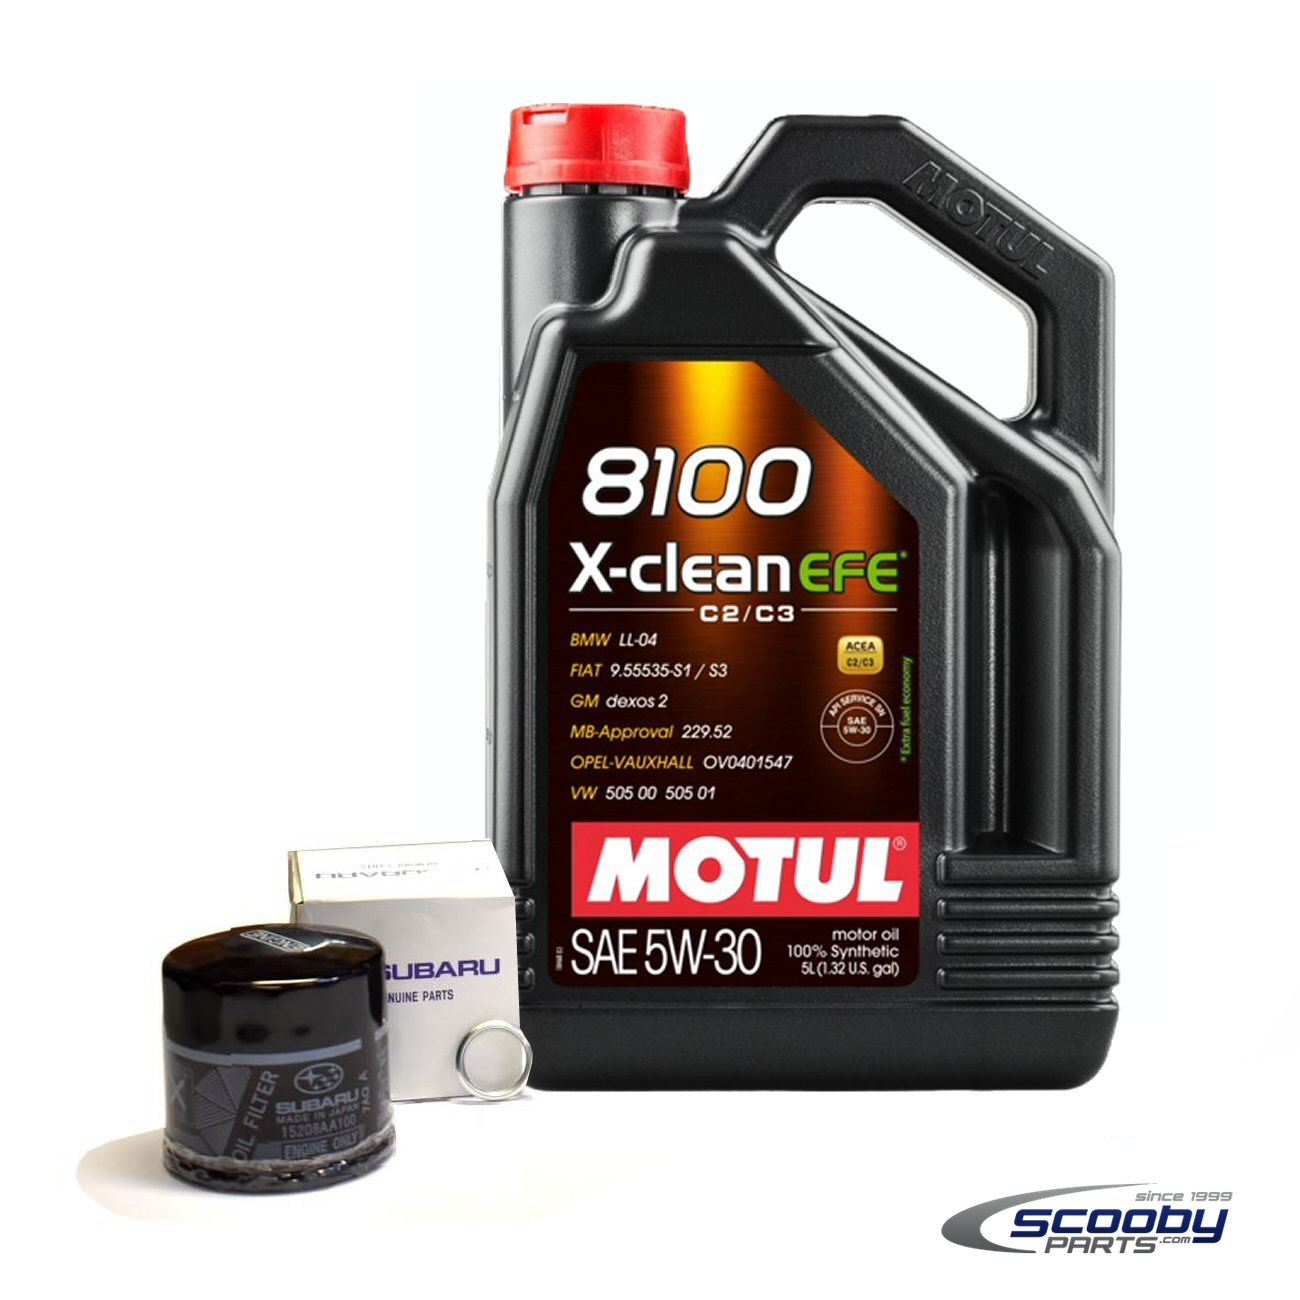 Motul 8100 X-clean efe Fully Synthetic 5w30 Engine Oil & Genuine Subaru Oil Filter Deal_1